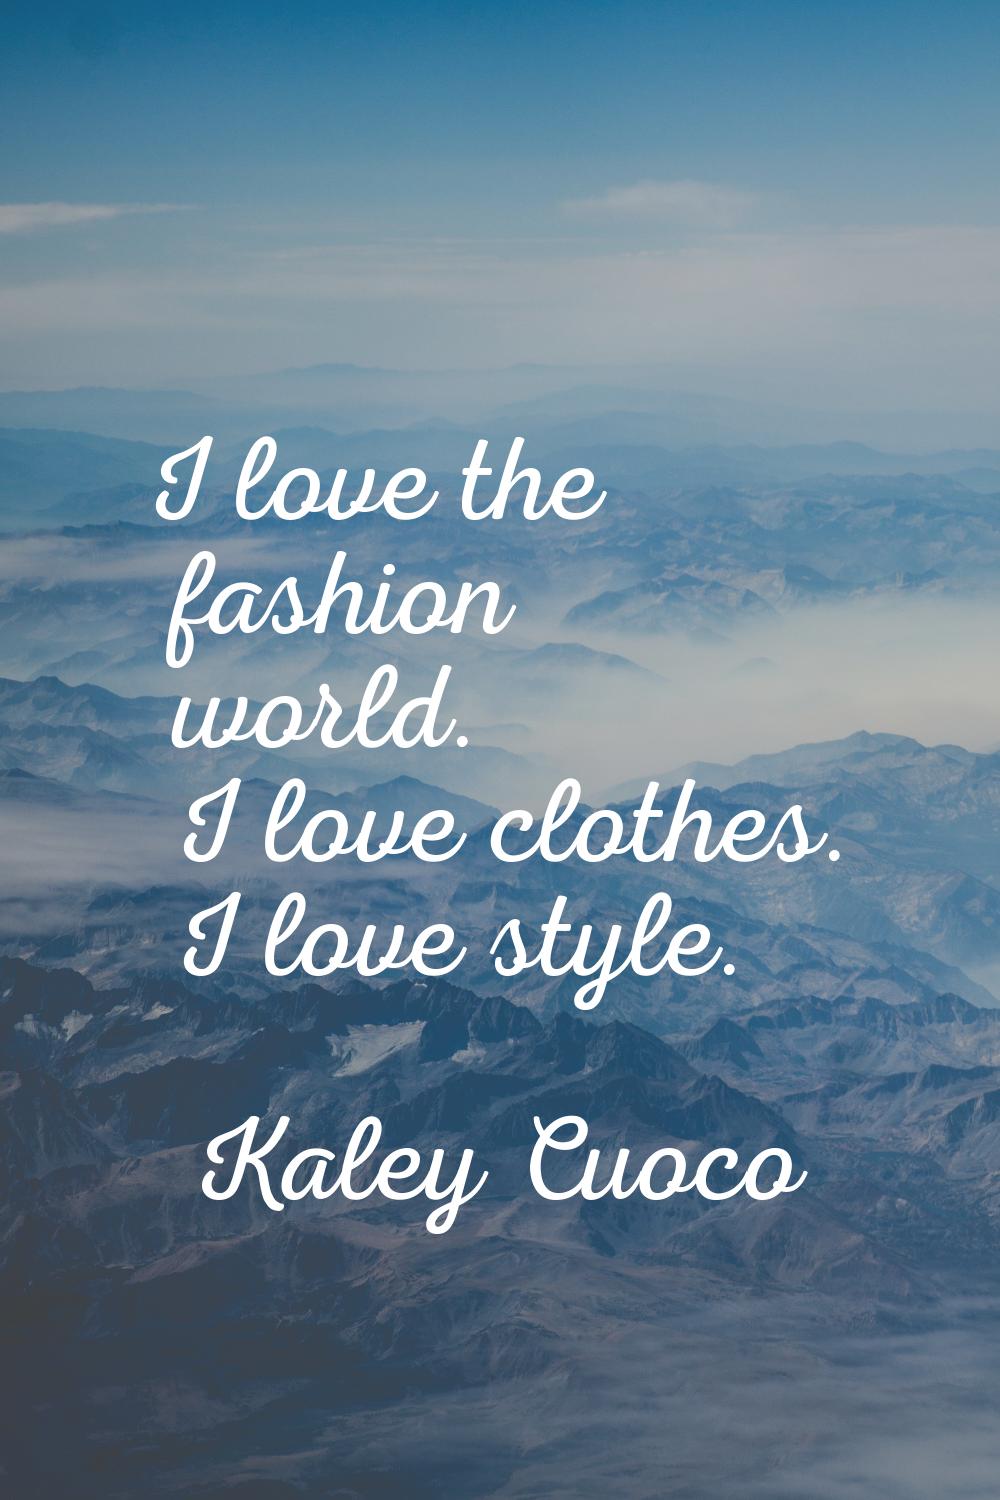 I love the fashion world. I love clothes. I love style.